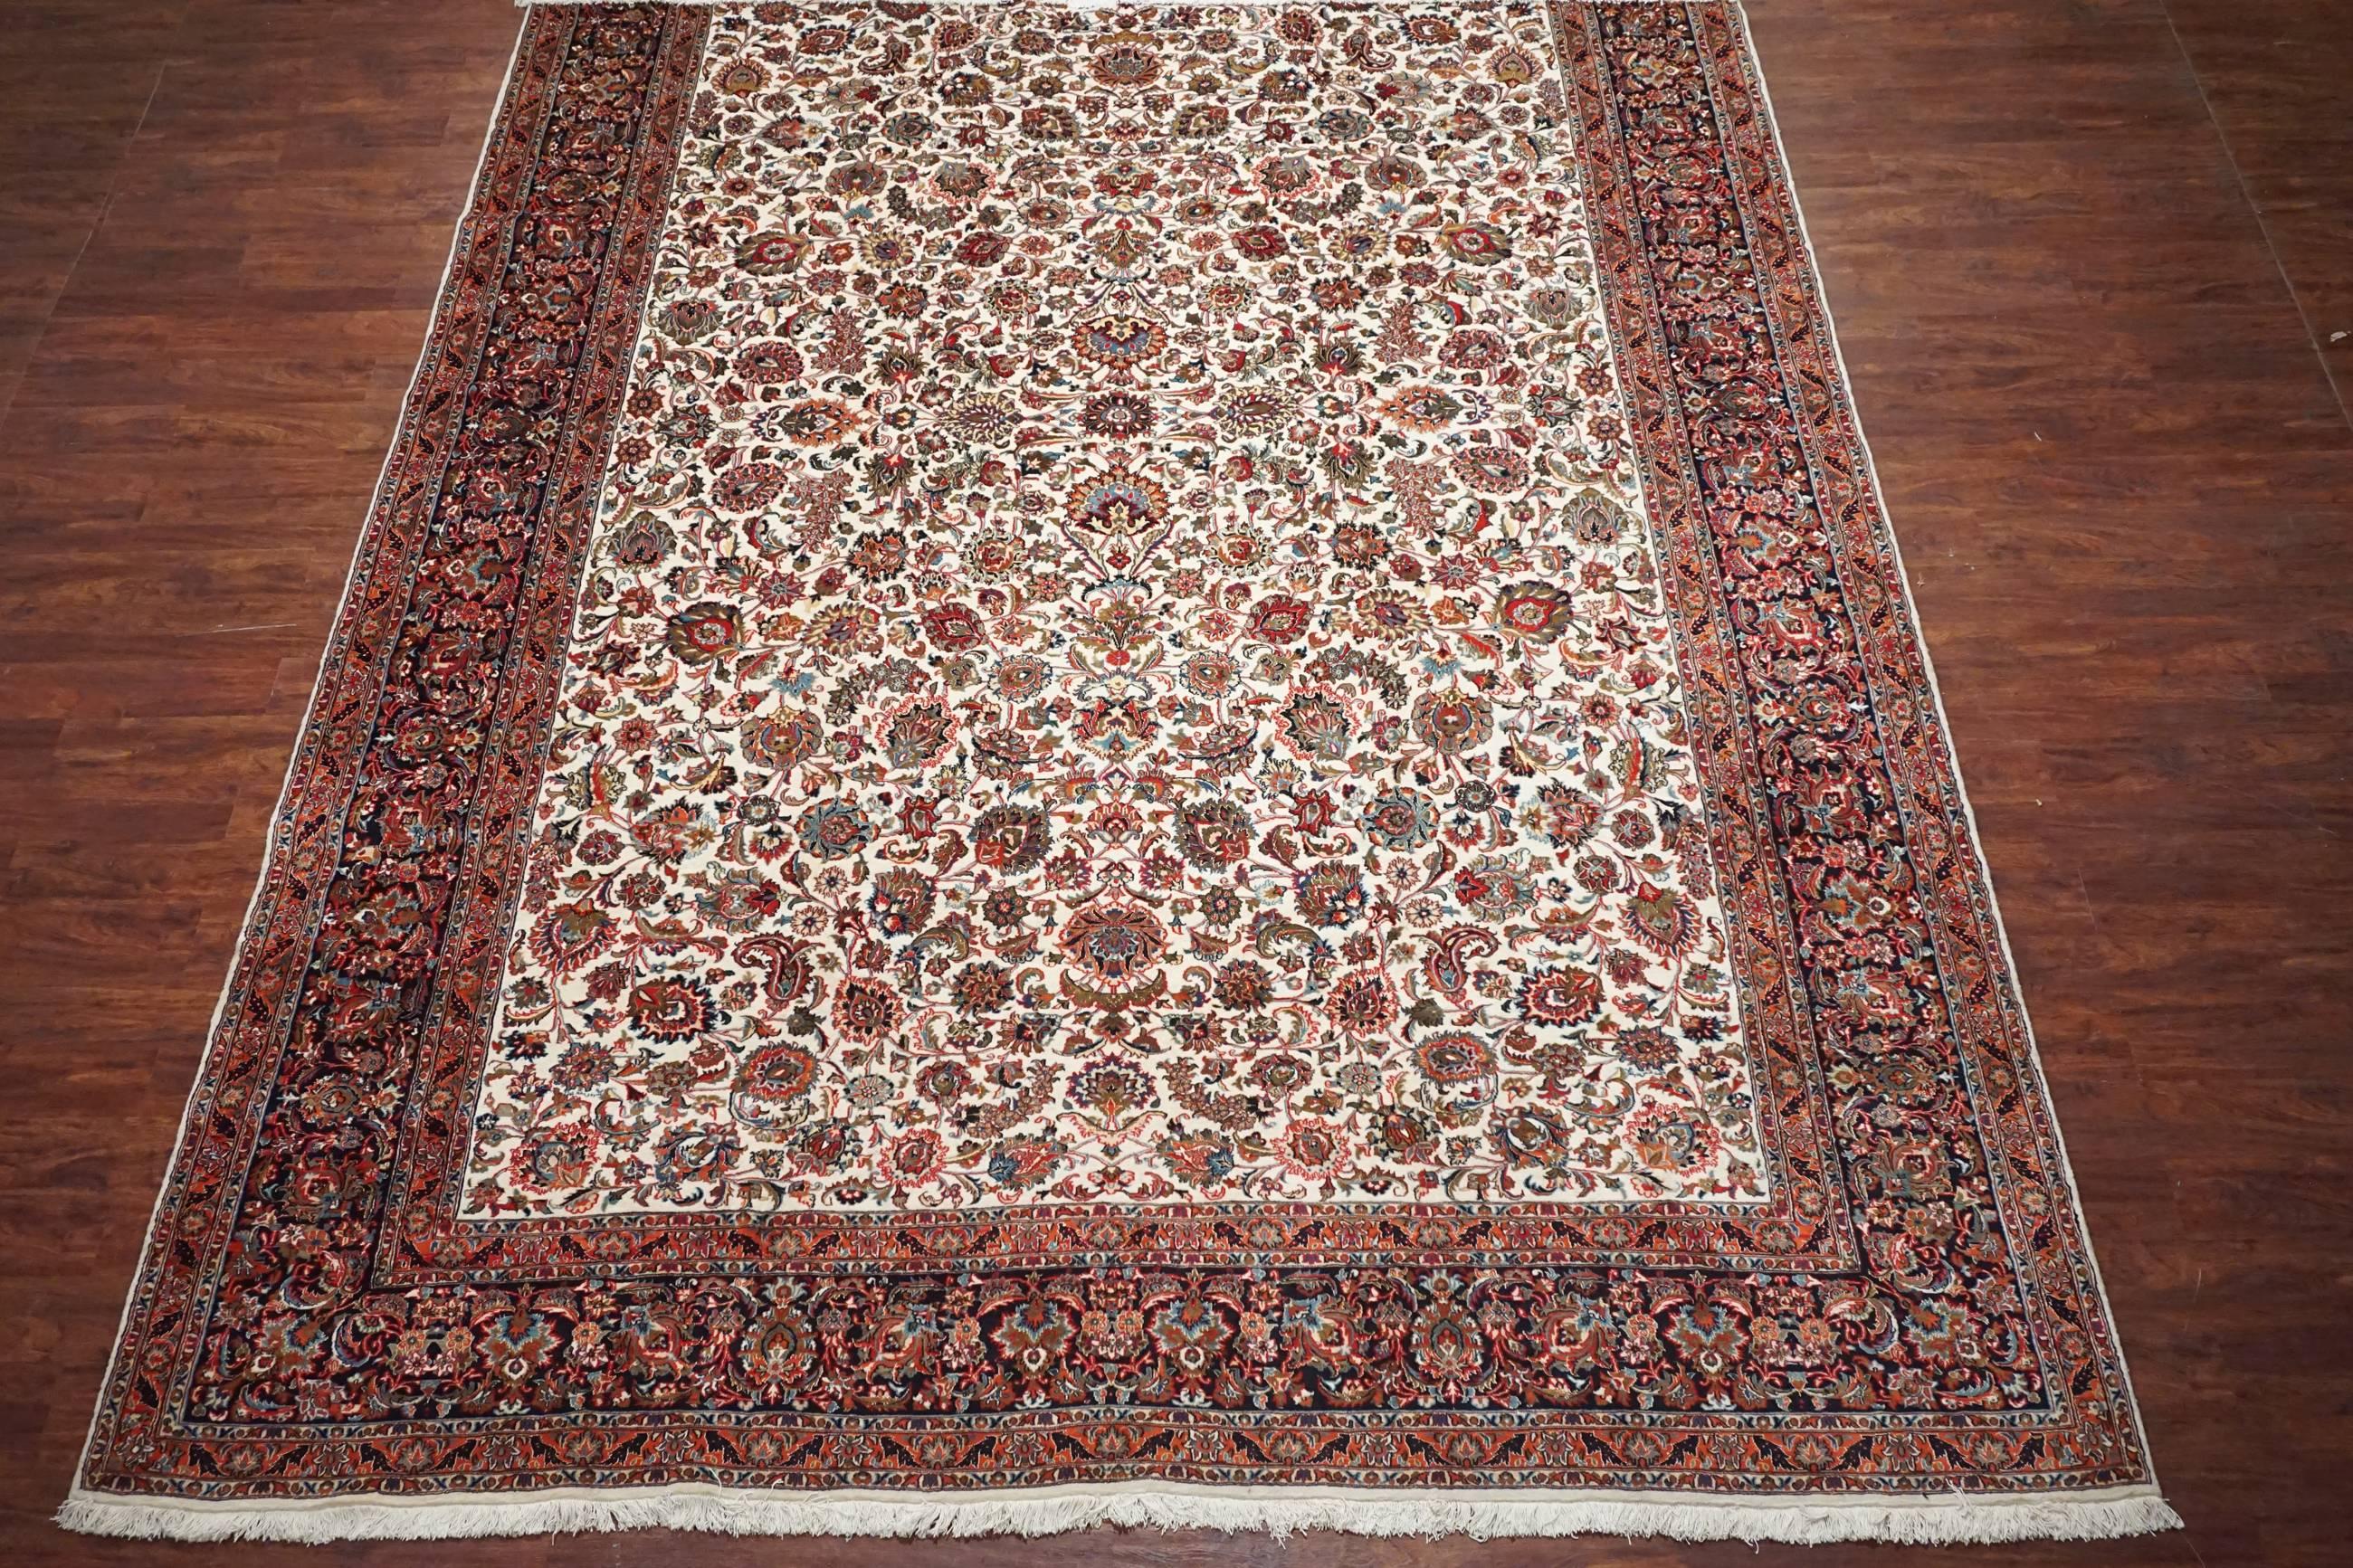 Fine wool and silk Persian Tabriz rug

circa 2000

Measures: 11' x 15' 8